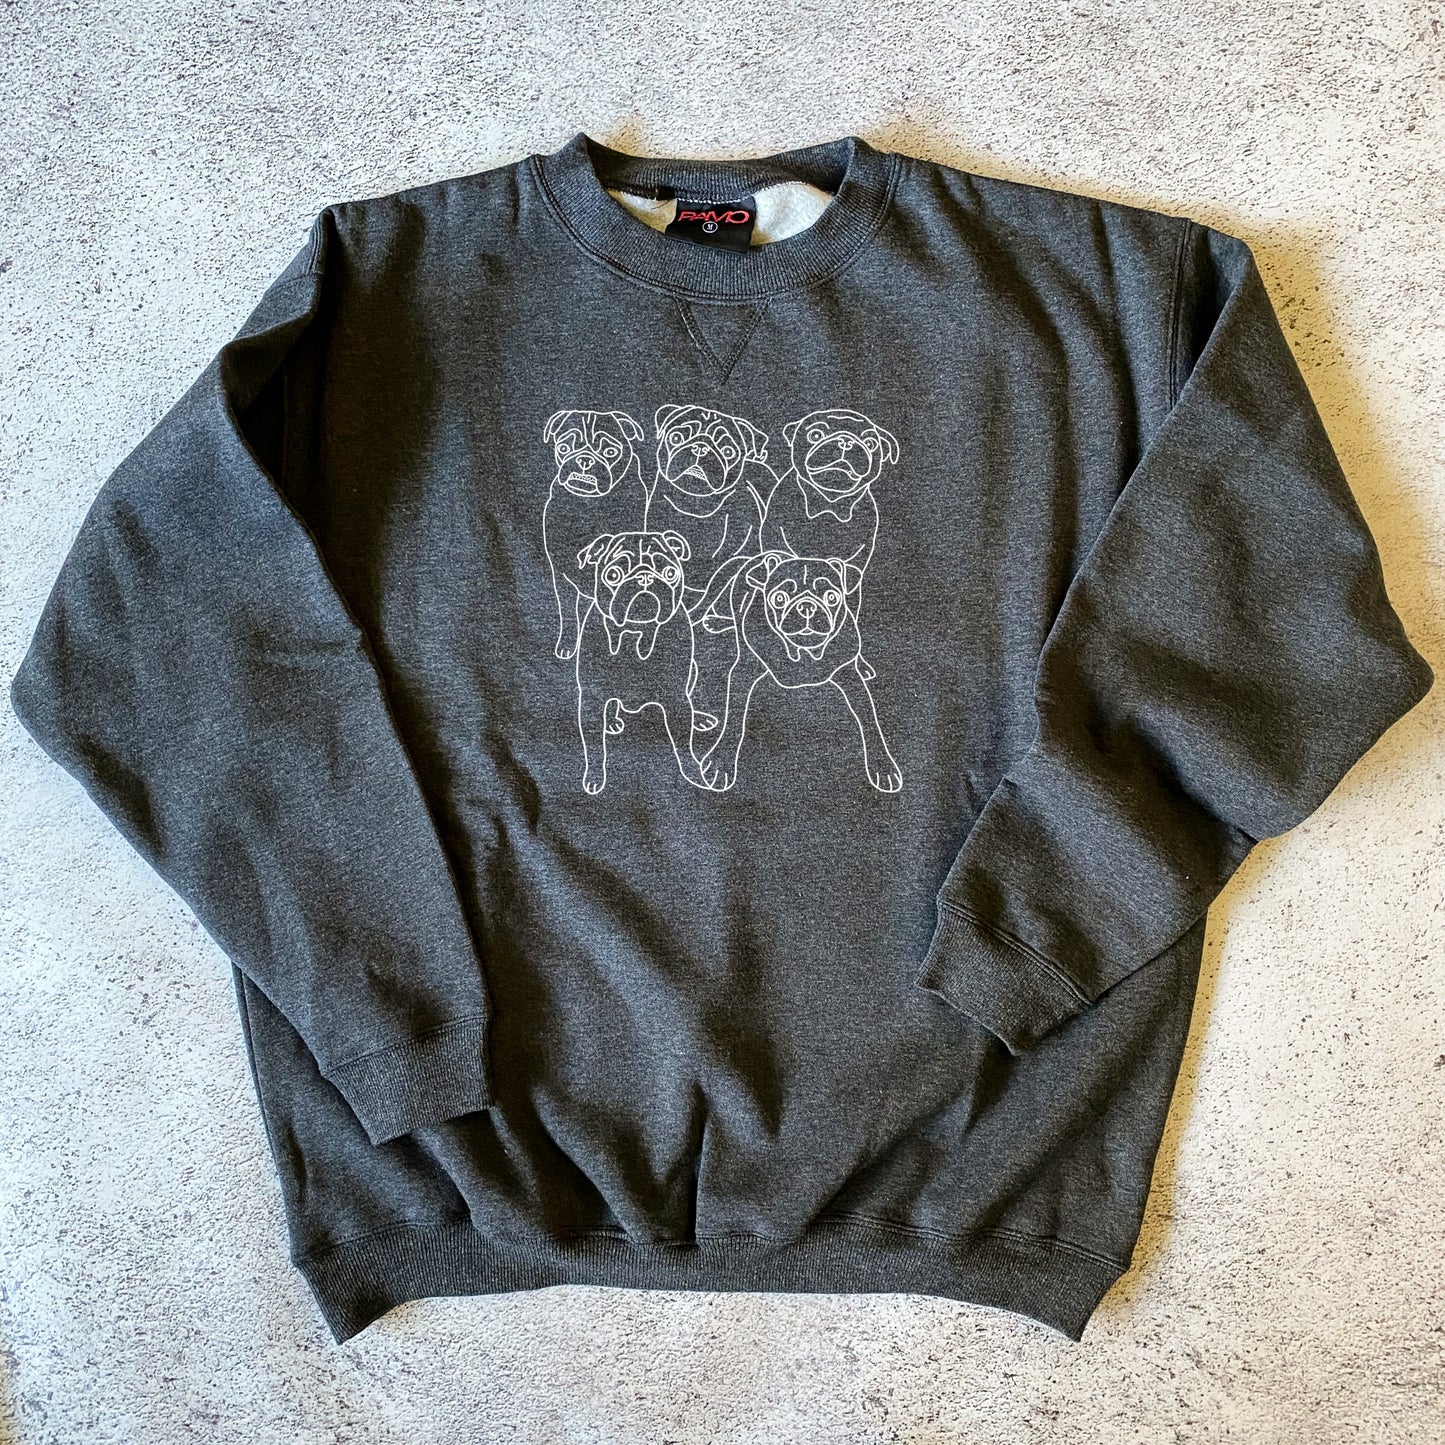 Custom Pet Portrait Sweatshirt - Five Pets